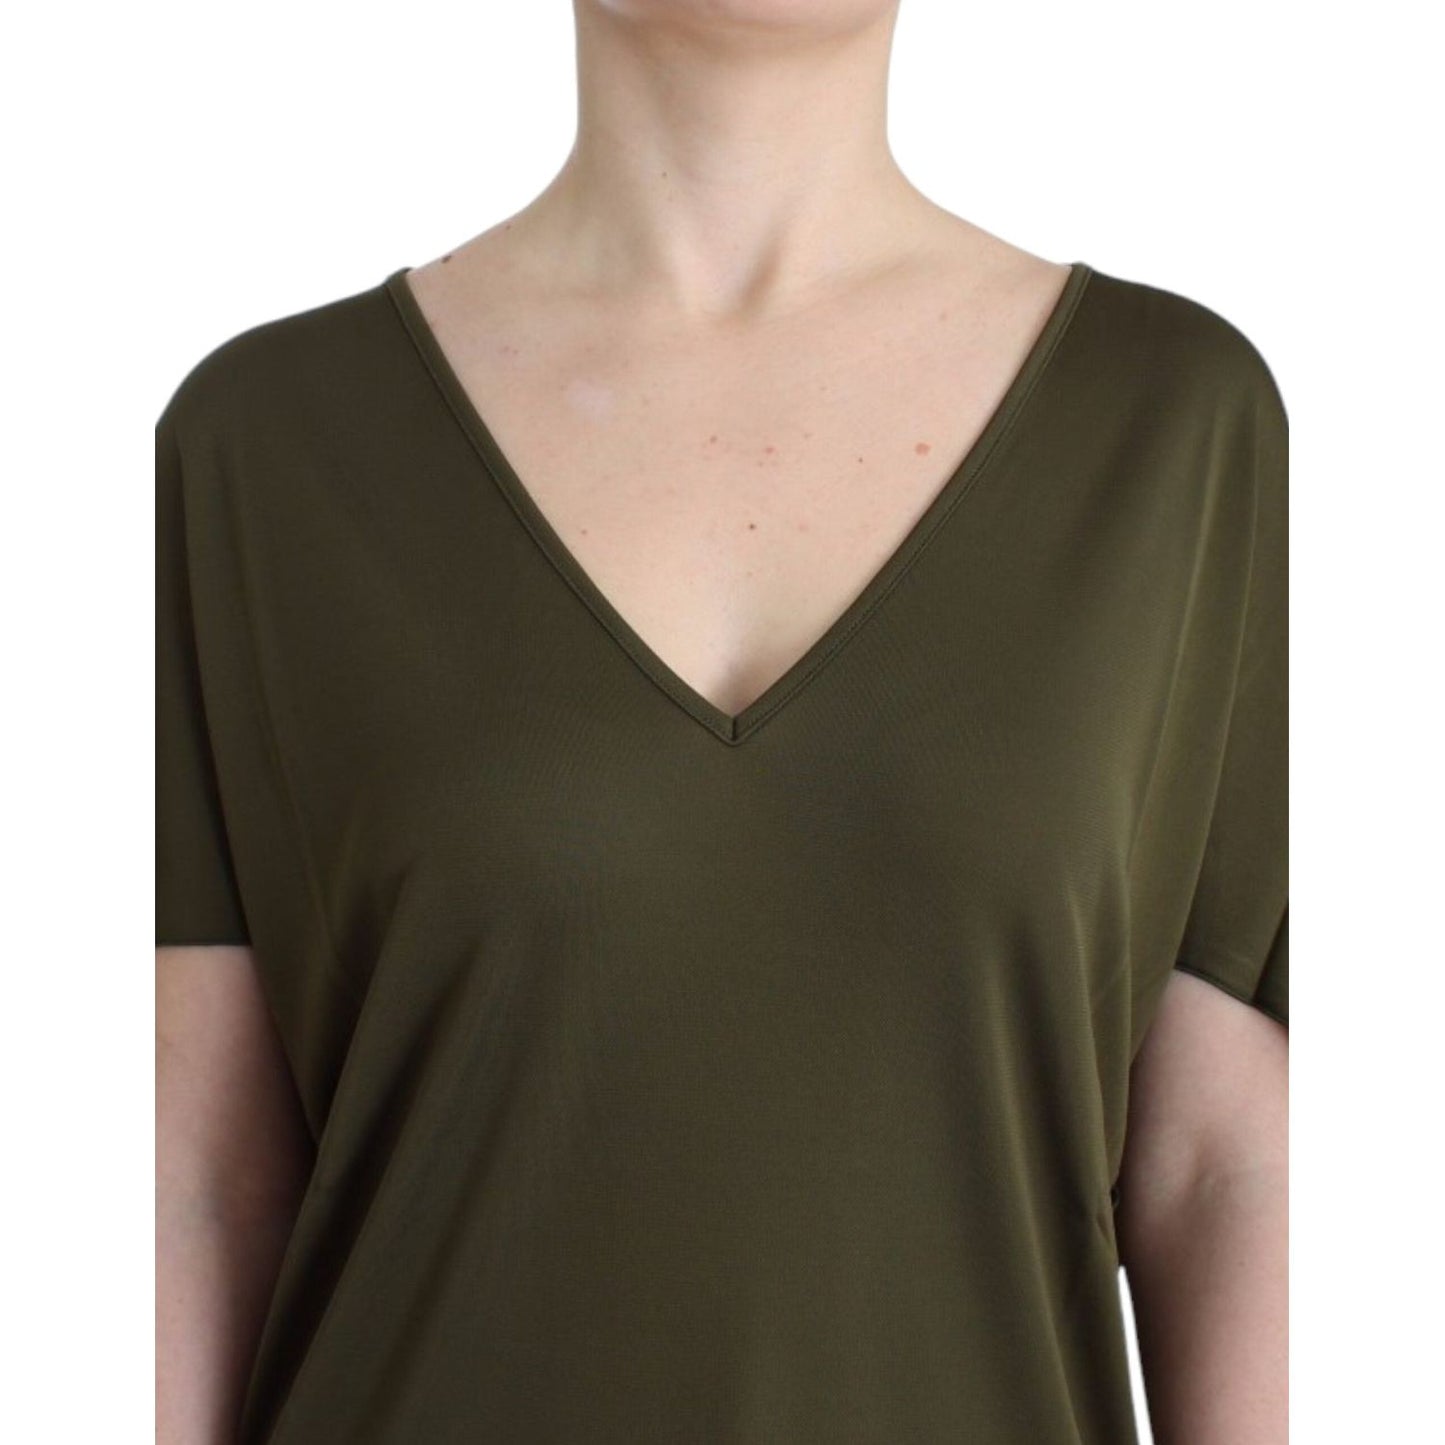 John Galliano Emerald Elegance Rayon Blouse green-shortsleeved-blouse-top 5650-green-shortsleeved-blouse-top-4-scaled-338bed19-077.jpg